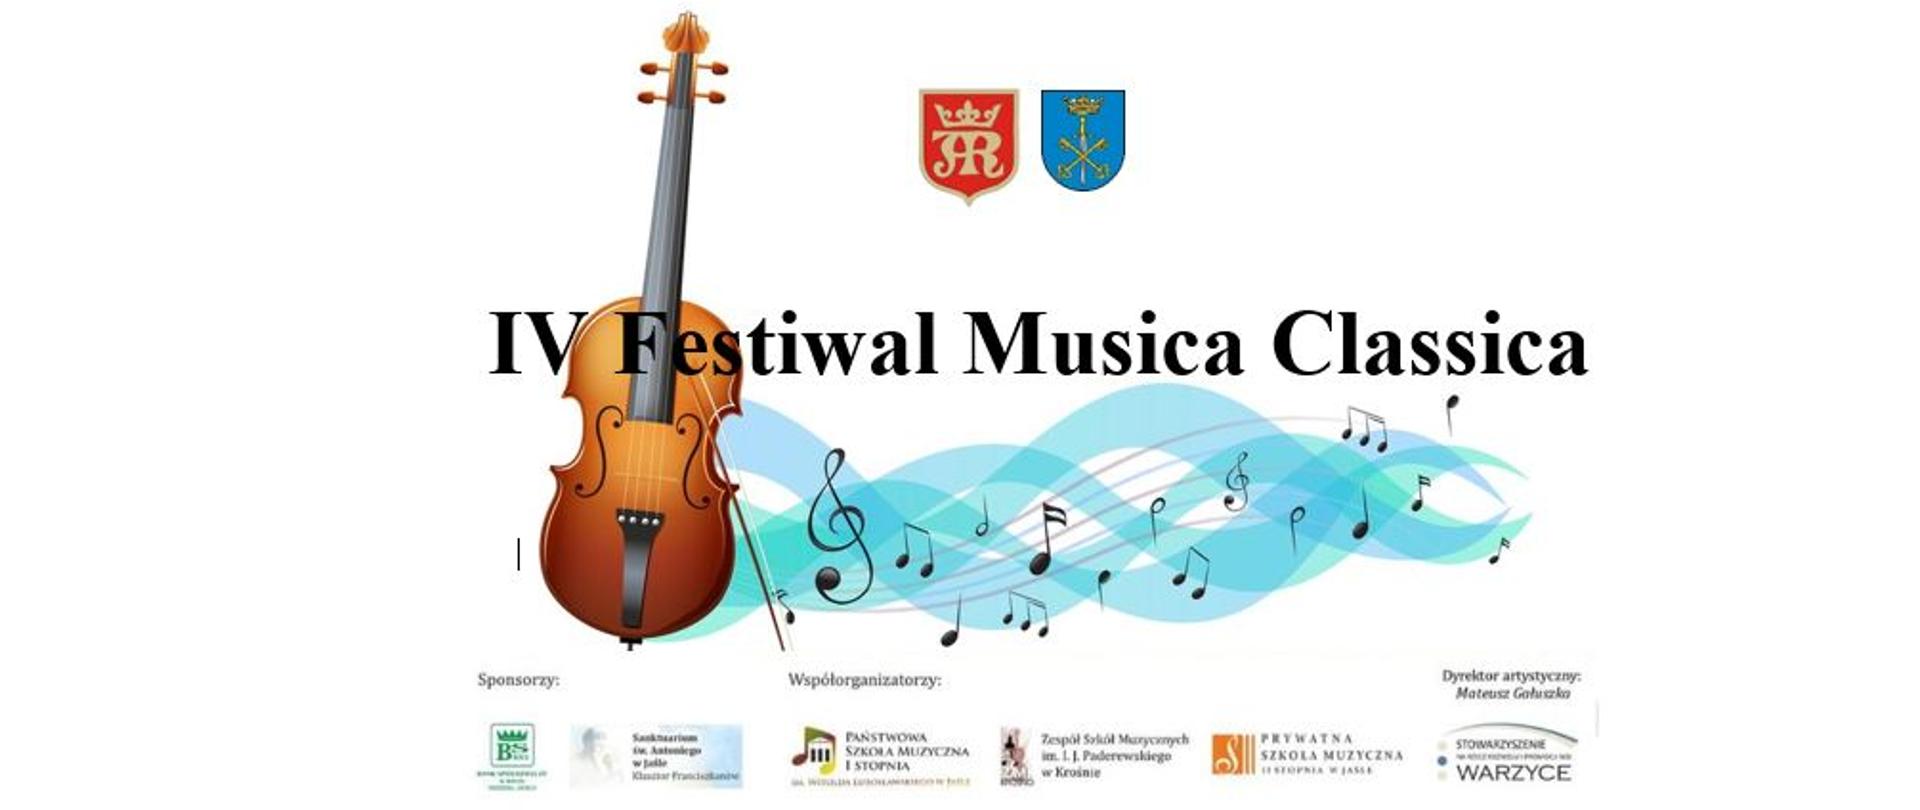 IV Festiwal Musica Classica